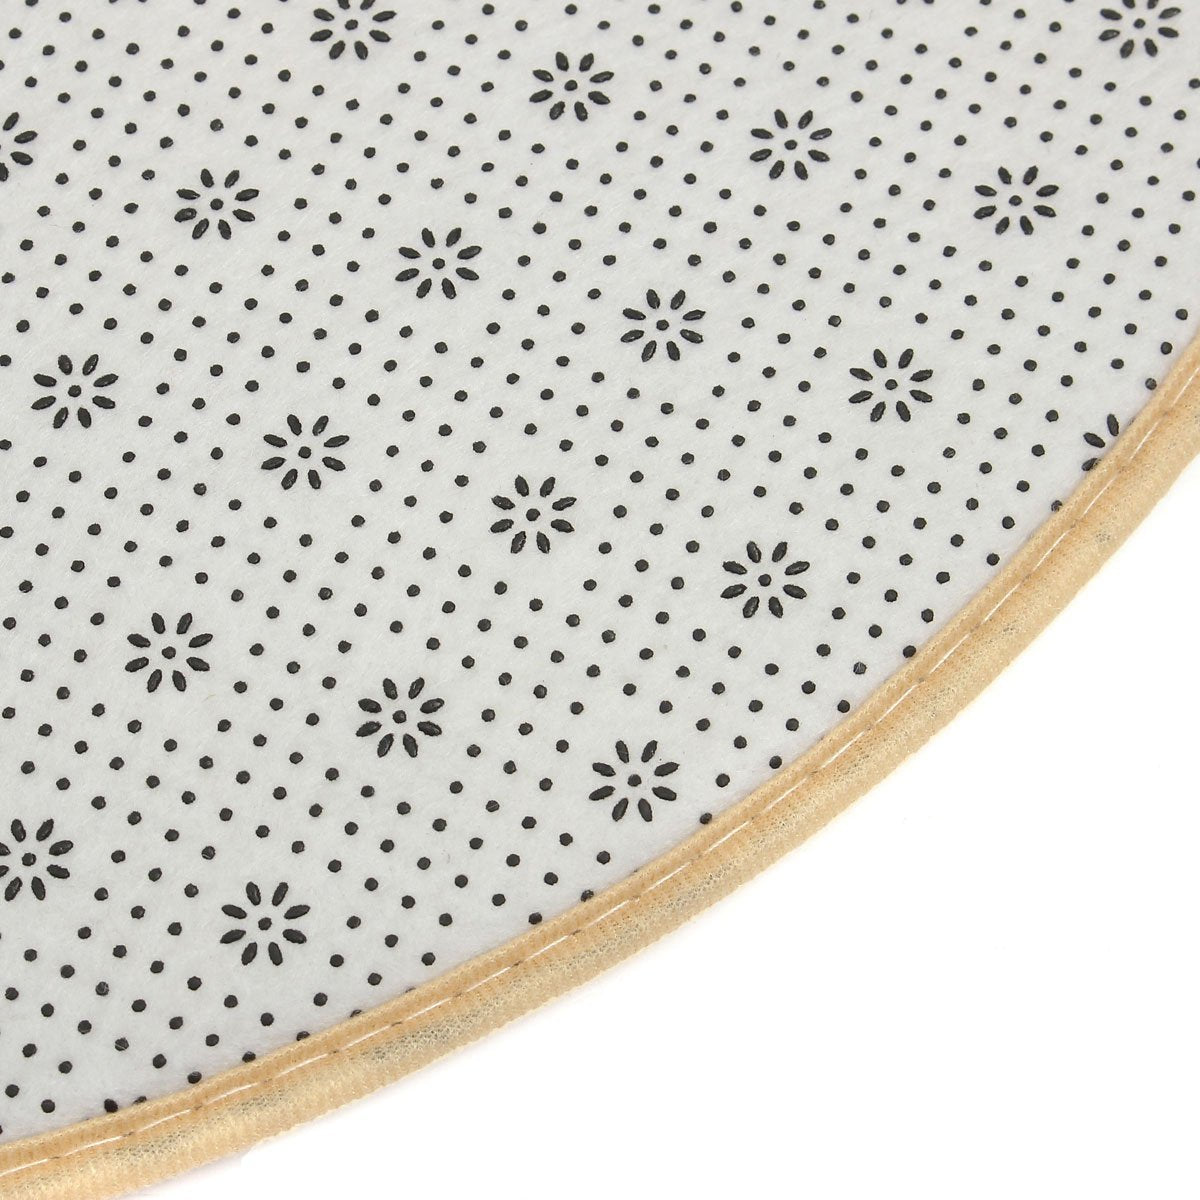 60x60cm Coral Velvet Bathroom Absorbent Carpet Anti Slip Round Mat Rug